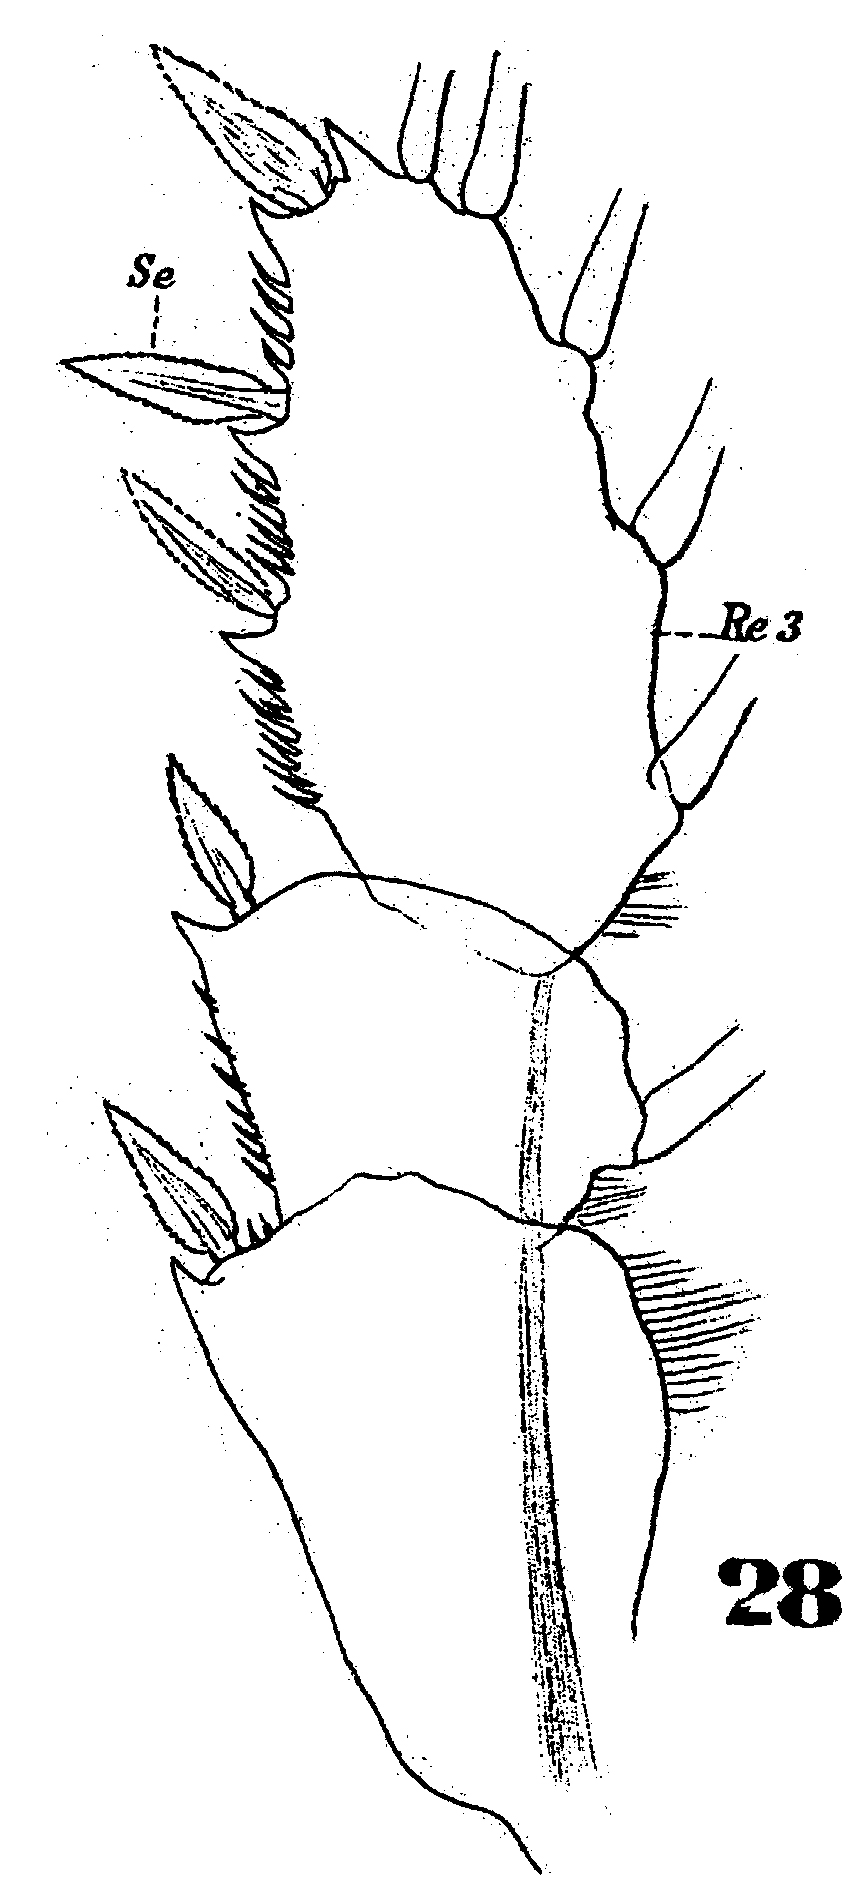 Species Copilia quadrata - Plate 11 of morphological figures